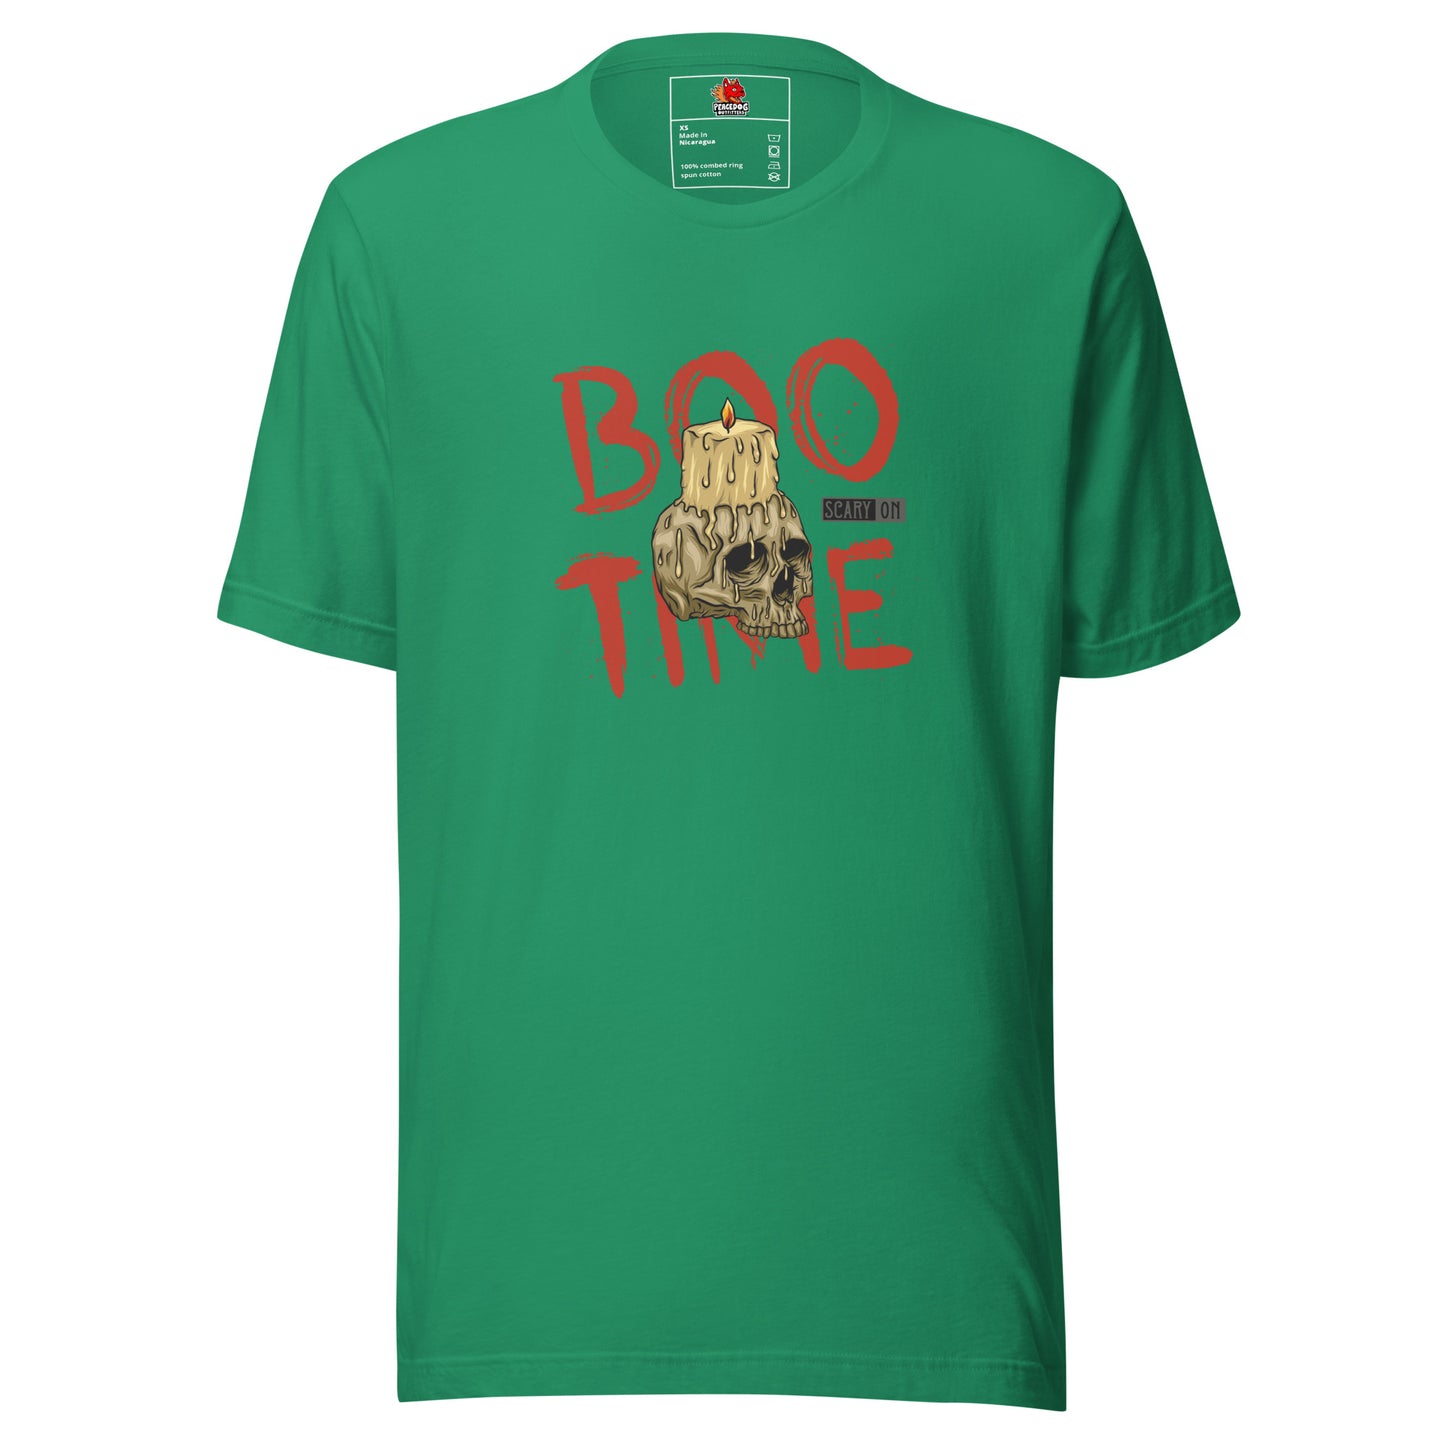 Boo Time T-shirt